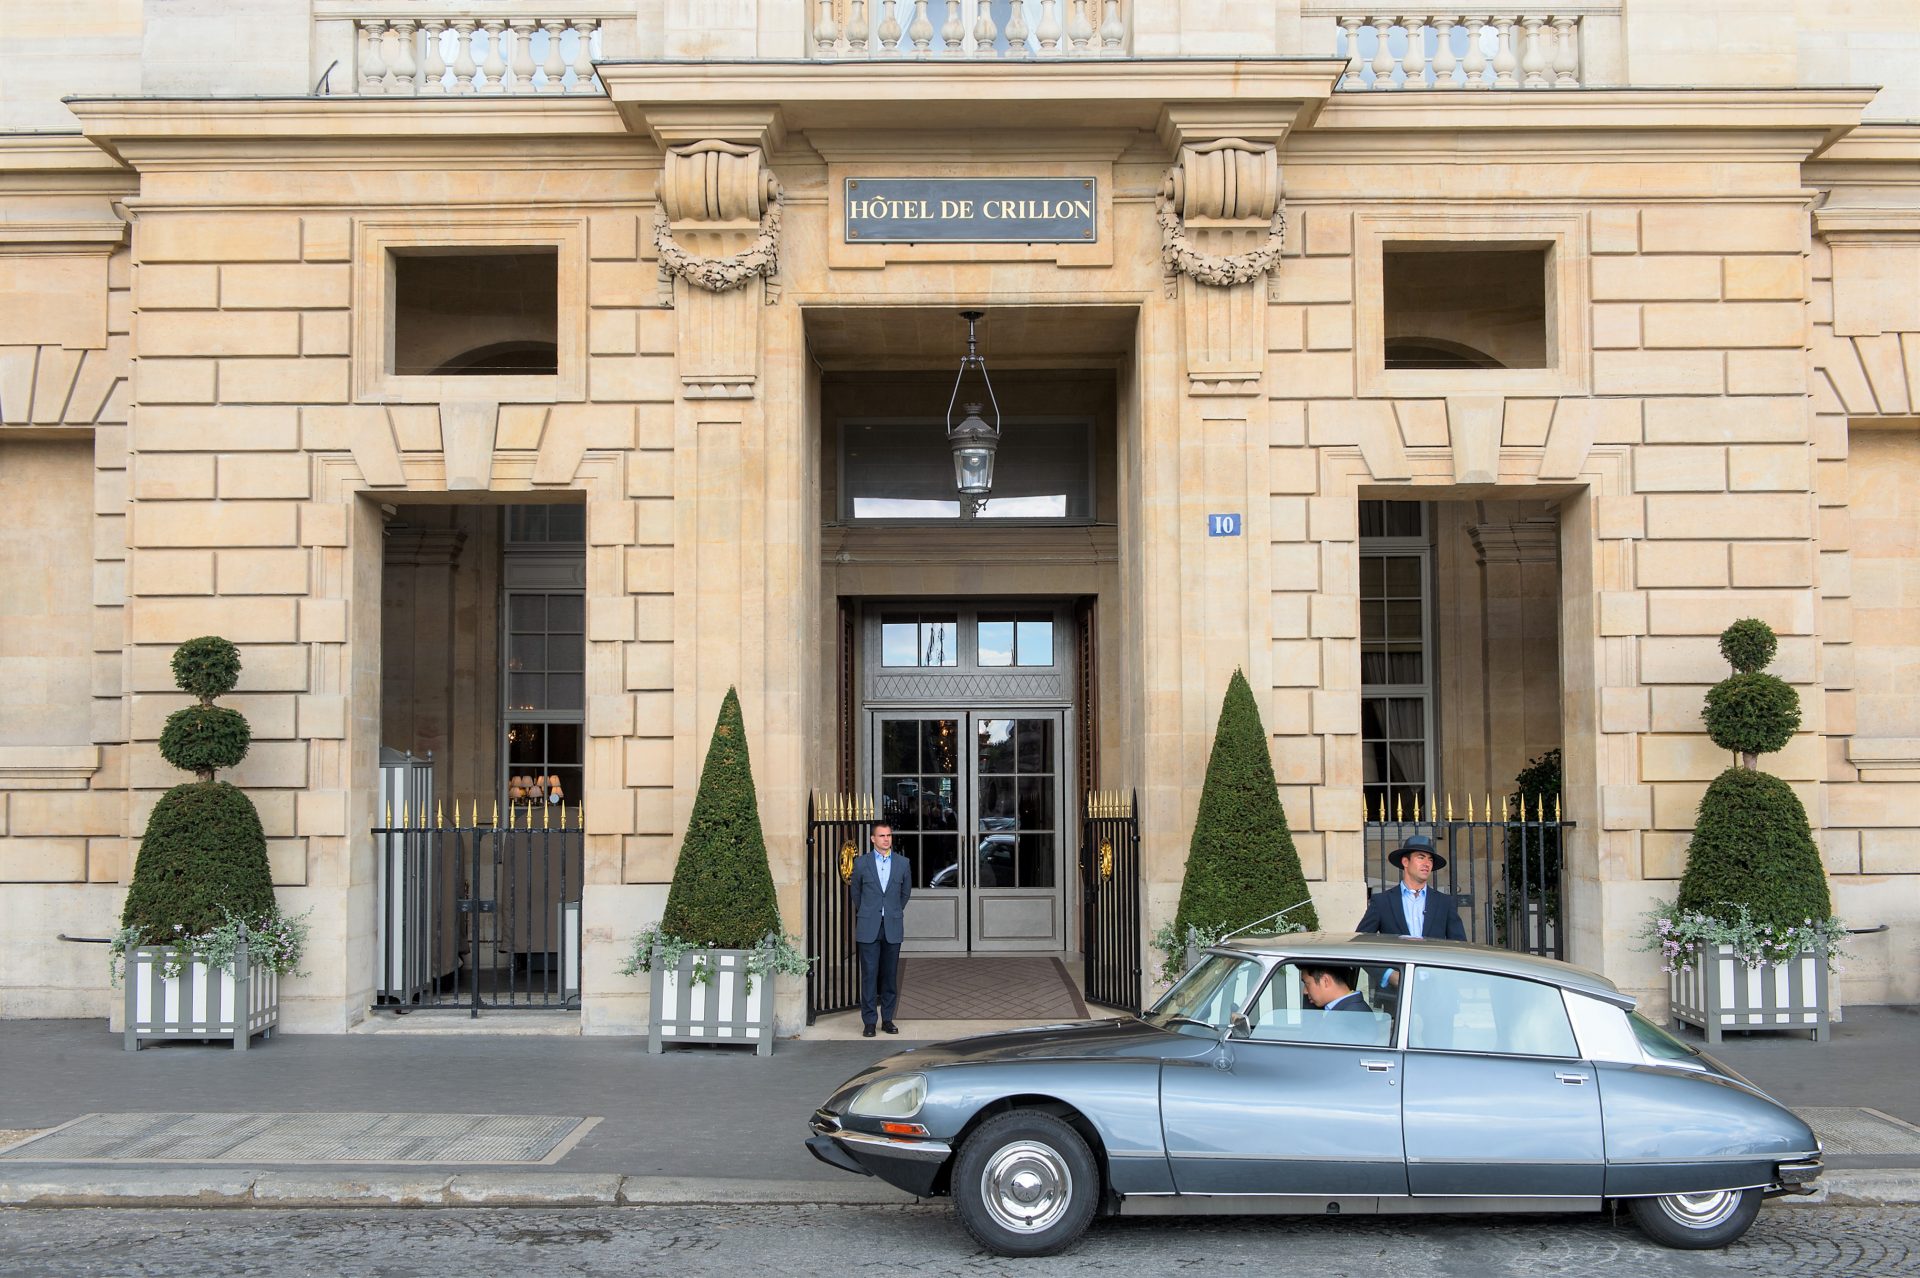 Hotel de Crillon, A Rosewood Hotel - Paris - France